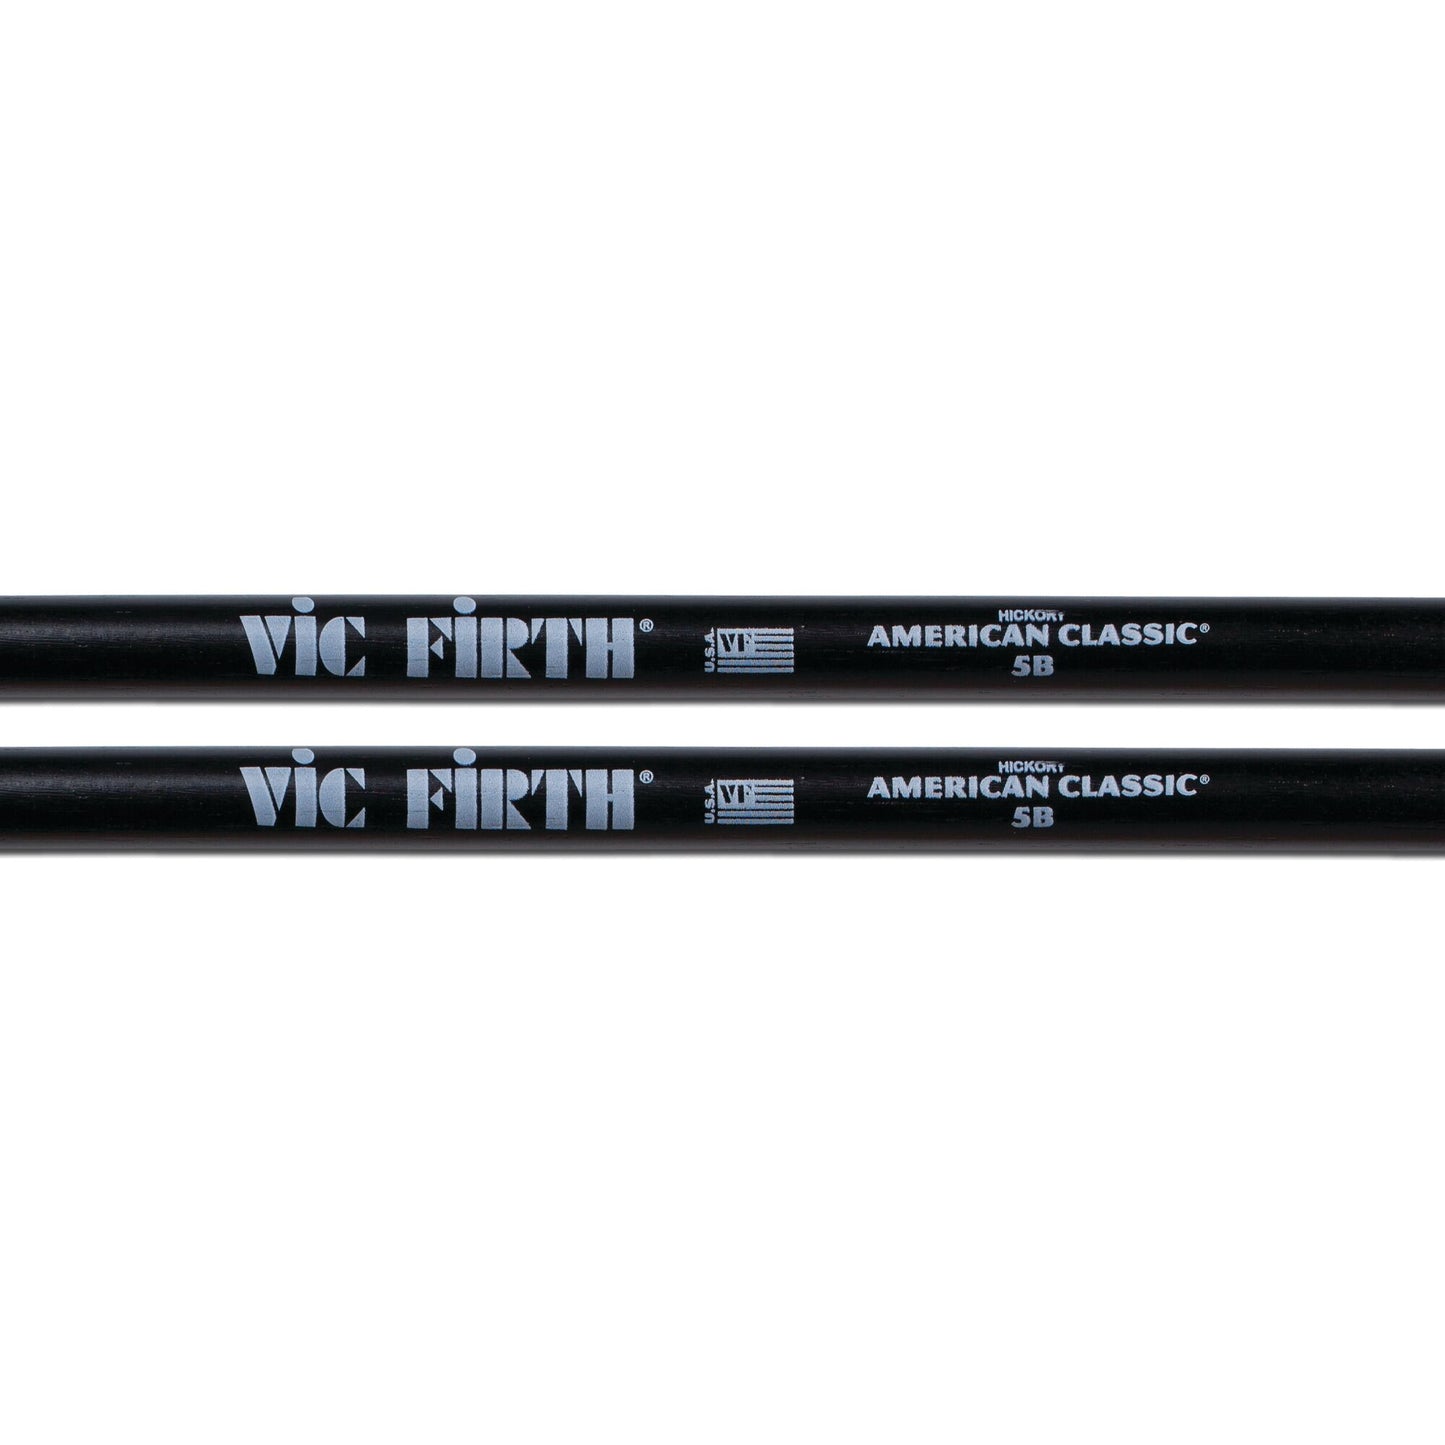 American Classic® 5B Black Drumsticks